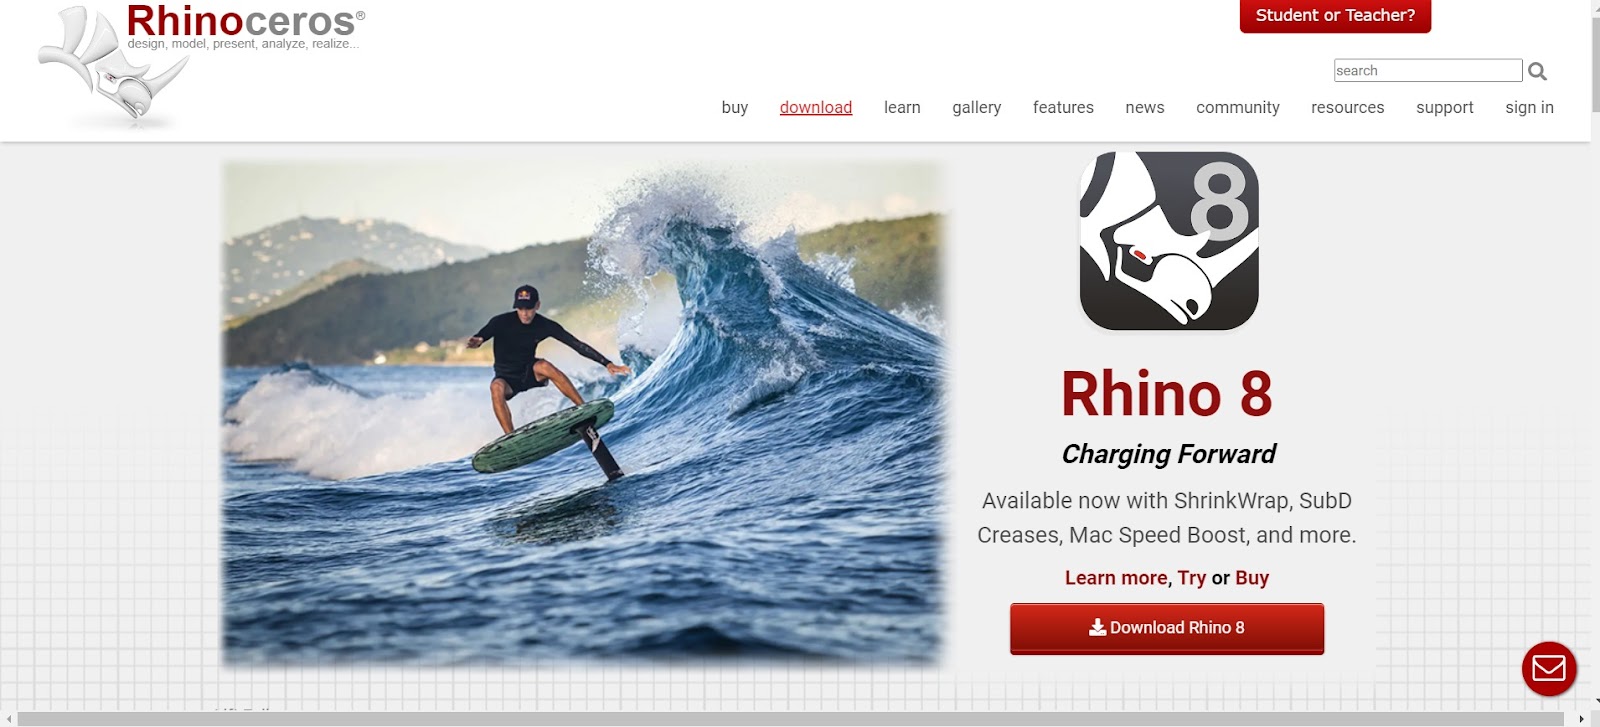 A screenshot of Rhino's website